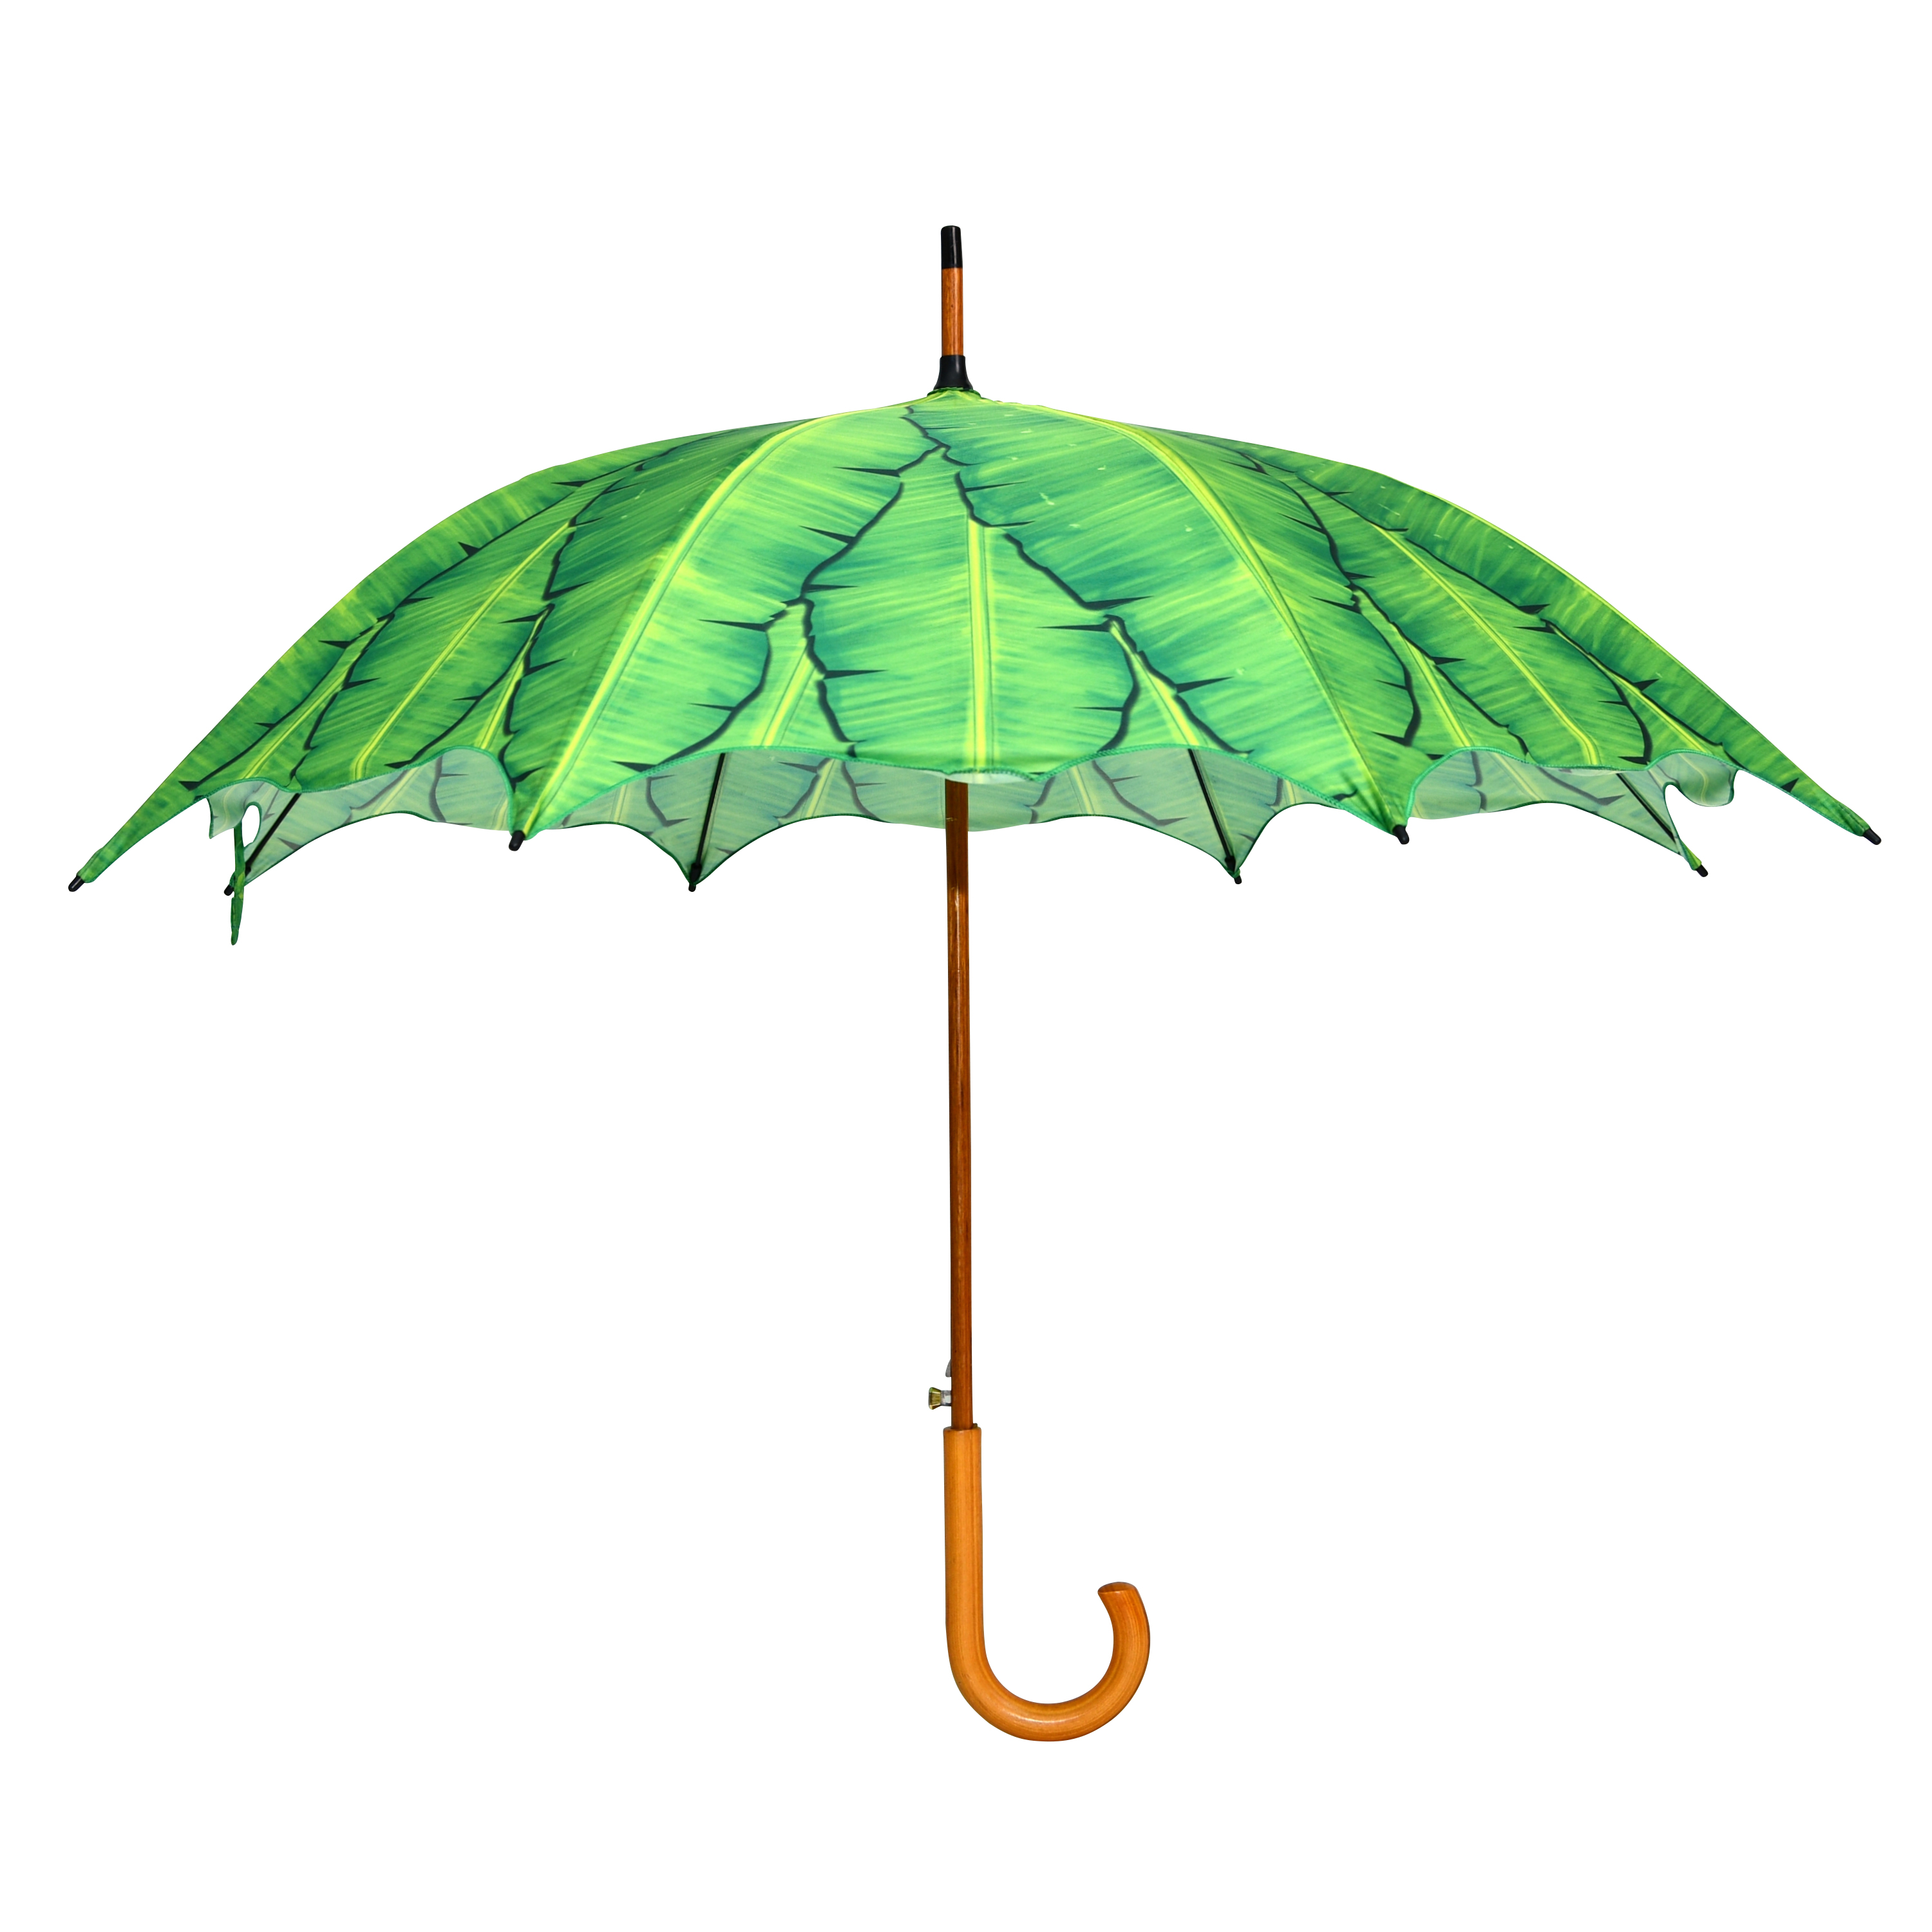 Ручка зонтика. Зонт банан. Пляжный зонтик. Тропический зонтик. Узорчатый зонтик.